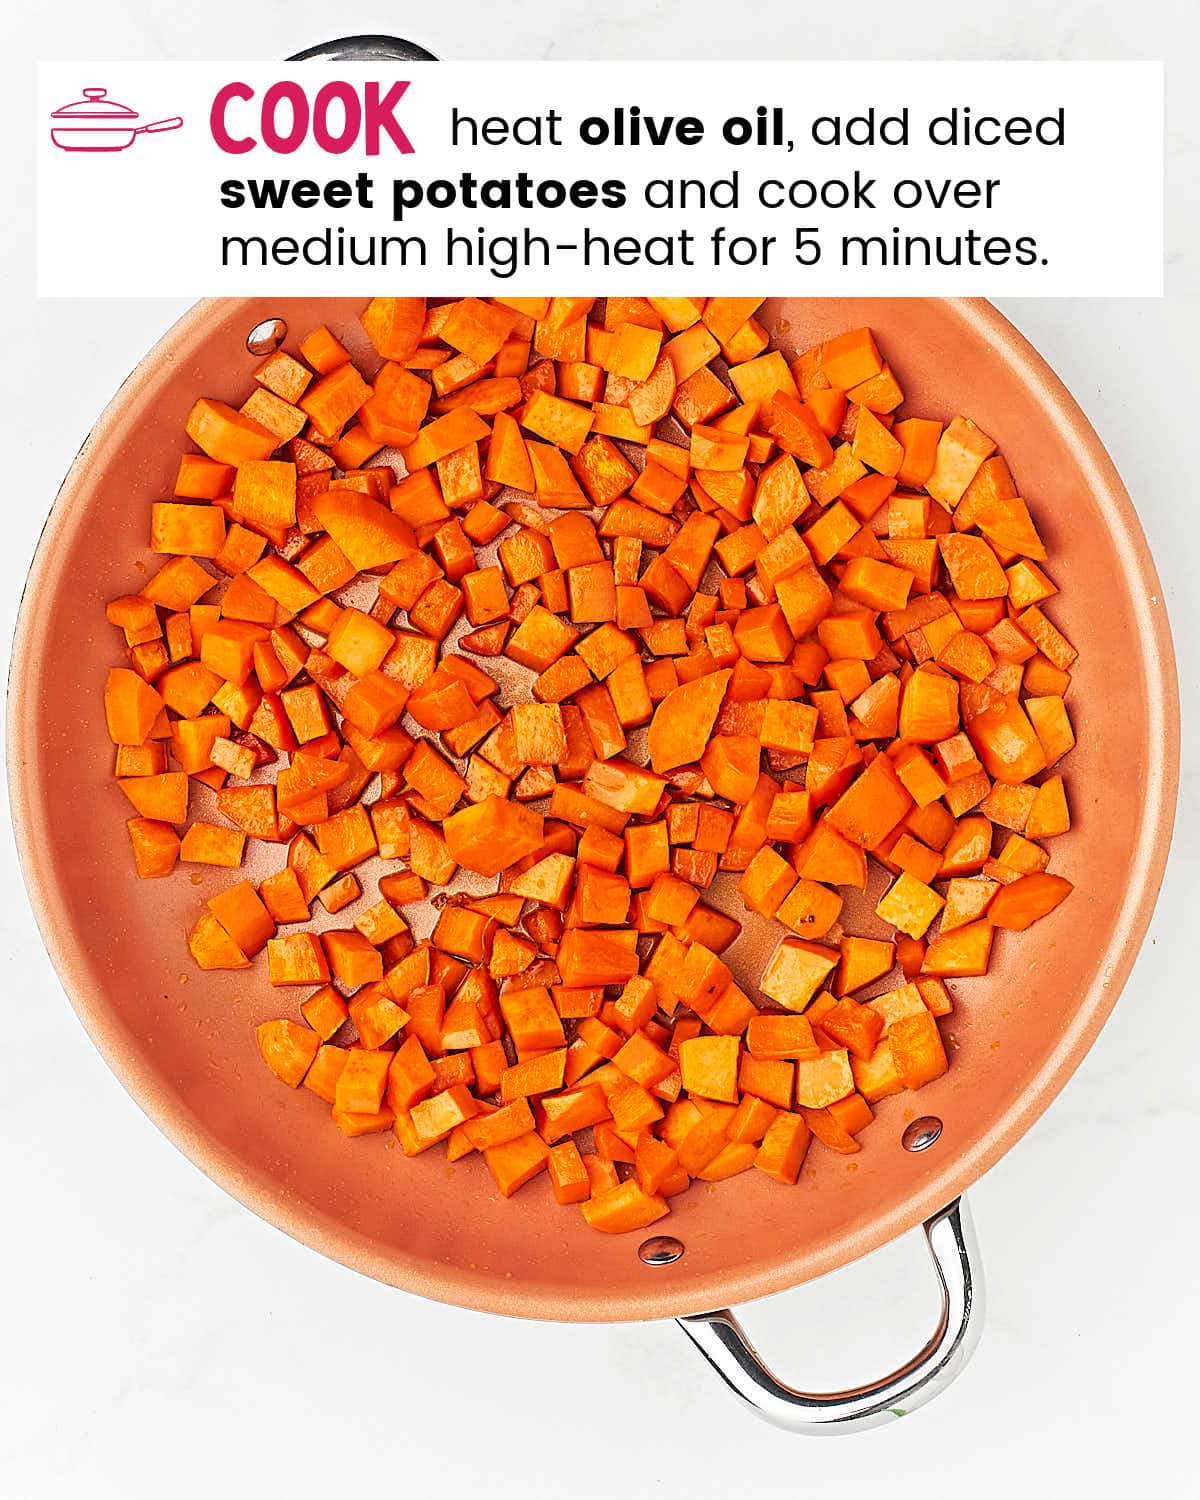 Process Step: Cook sweet potatoes. 